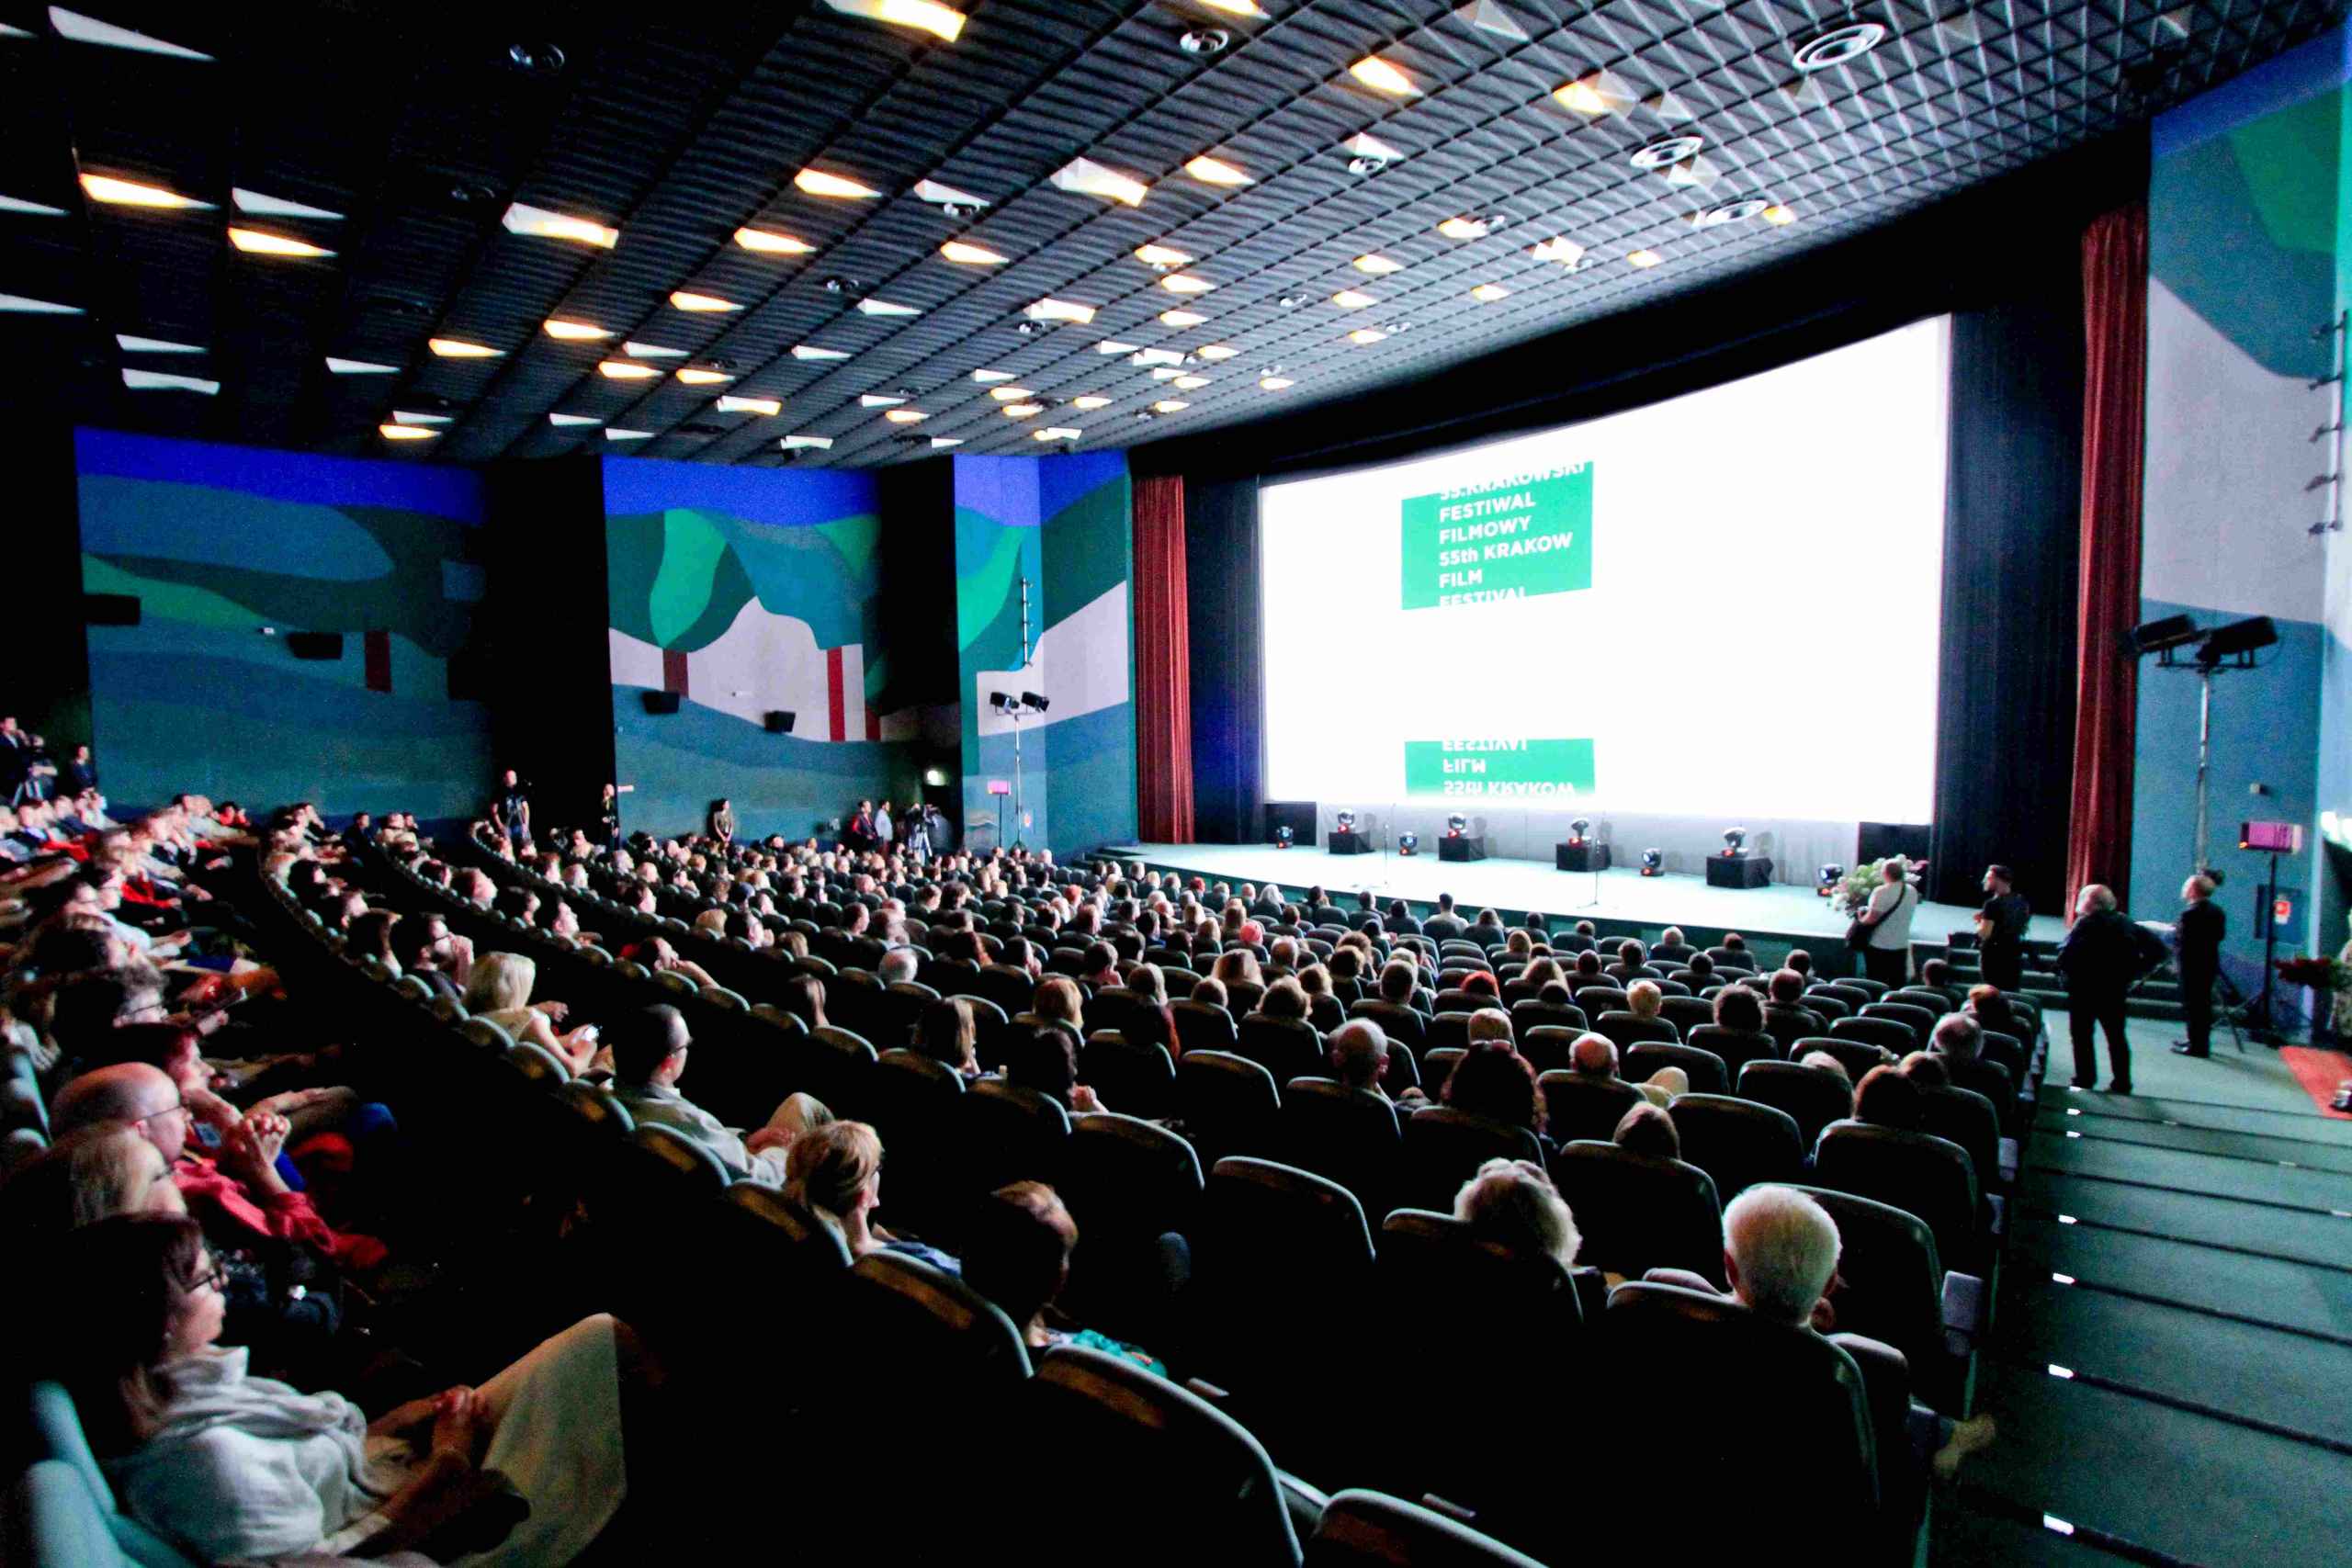 Award ceremony and screening of awarded films